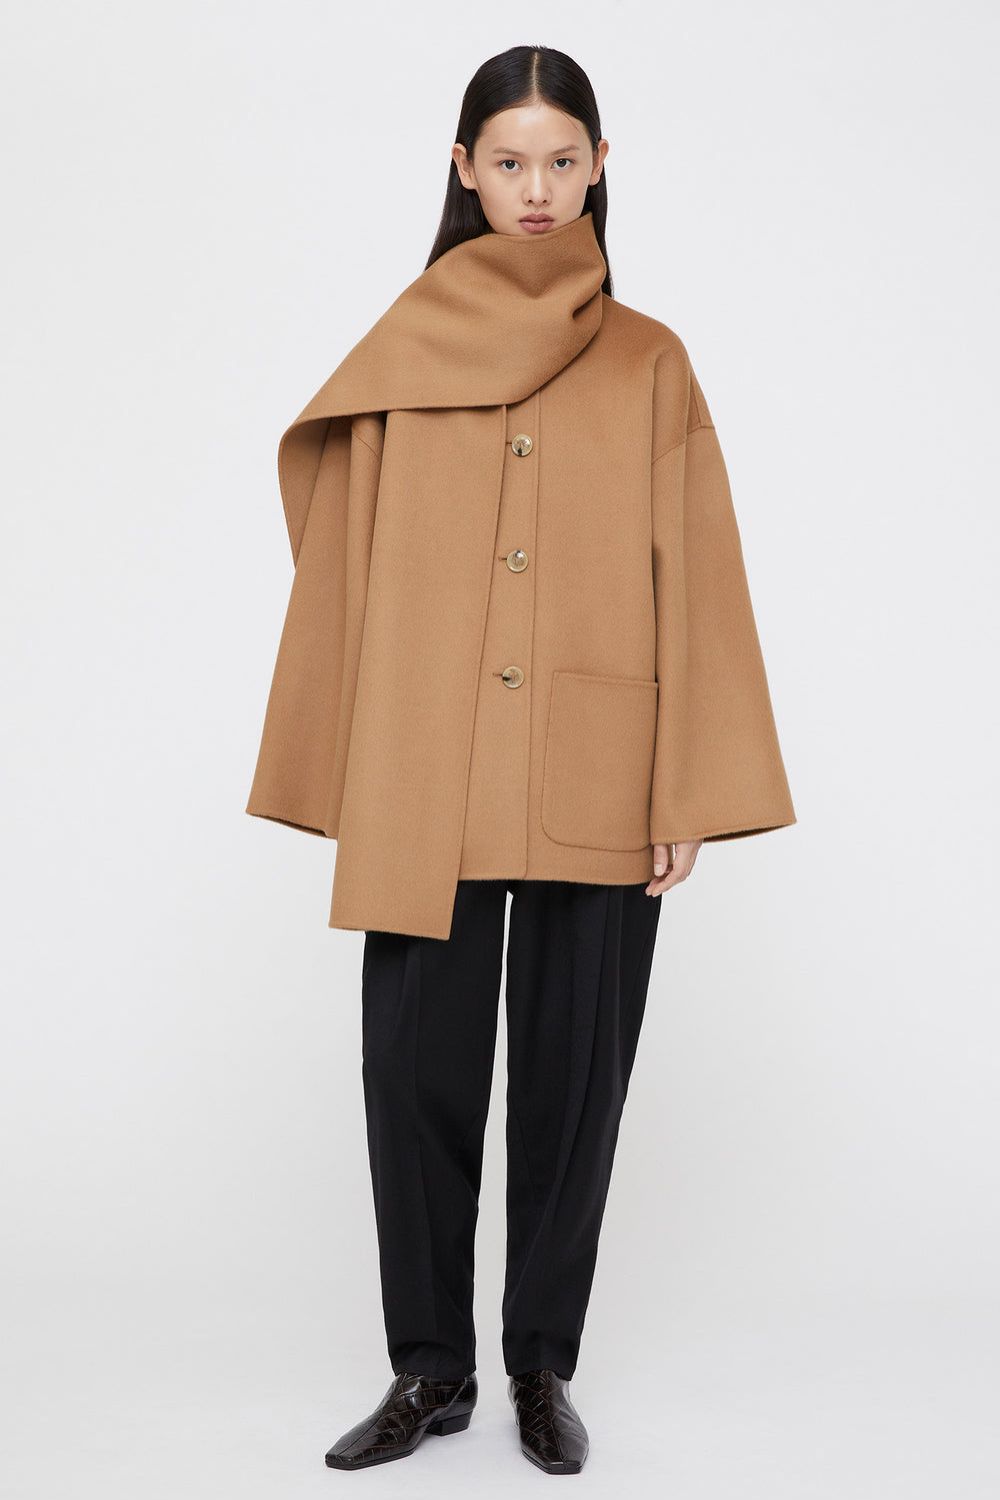 The-Gloss-Magazine-best-winter-coats-scarf-coat-trend-5